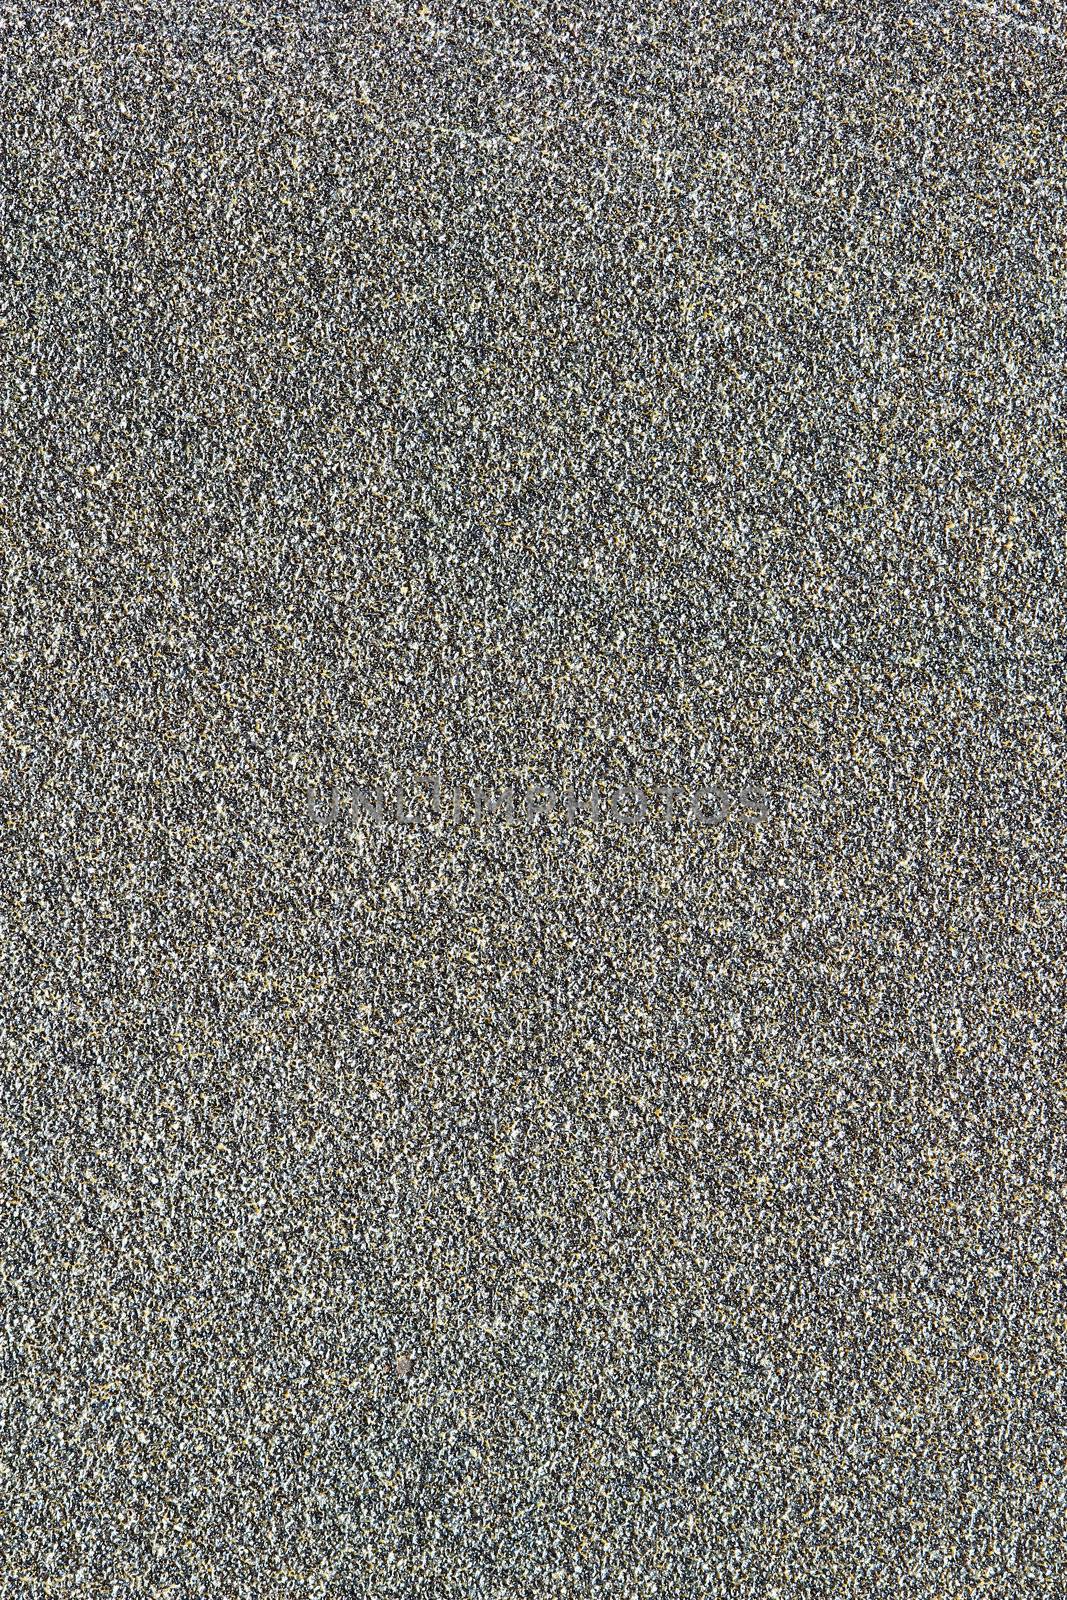 sandpaper texture by bajita111122